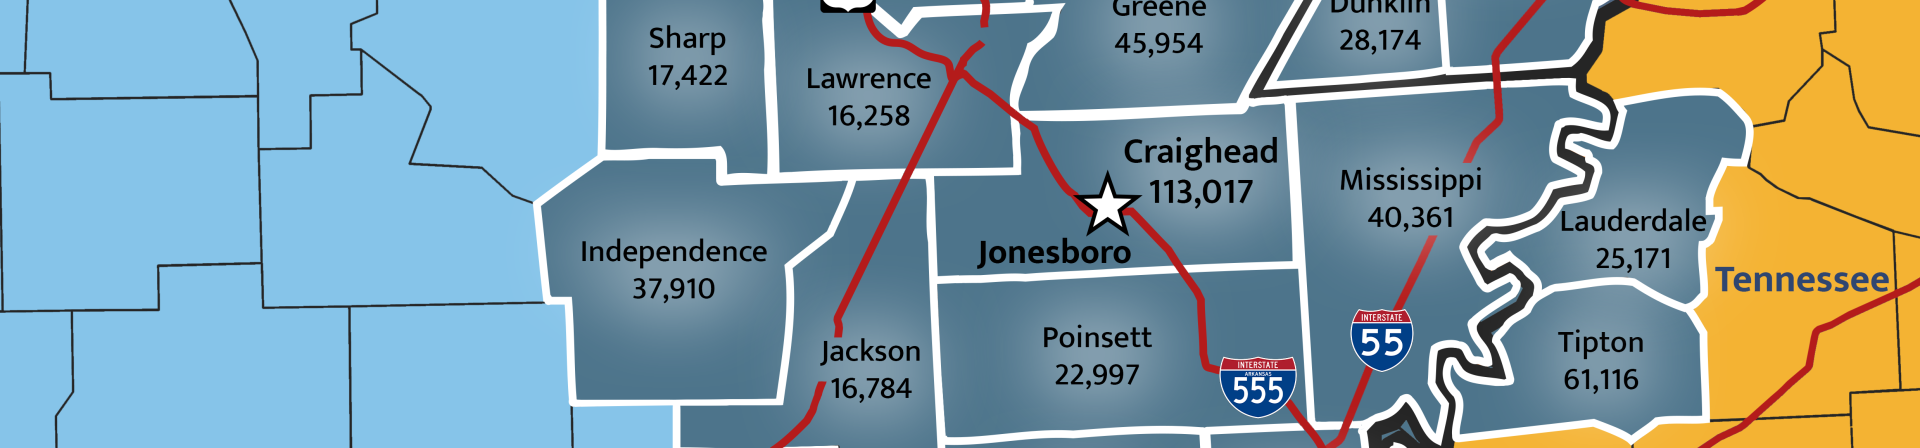 Jonesboro Labor Market Map of Counties with Population